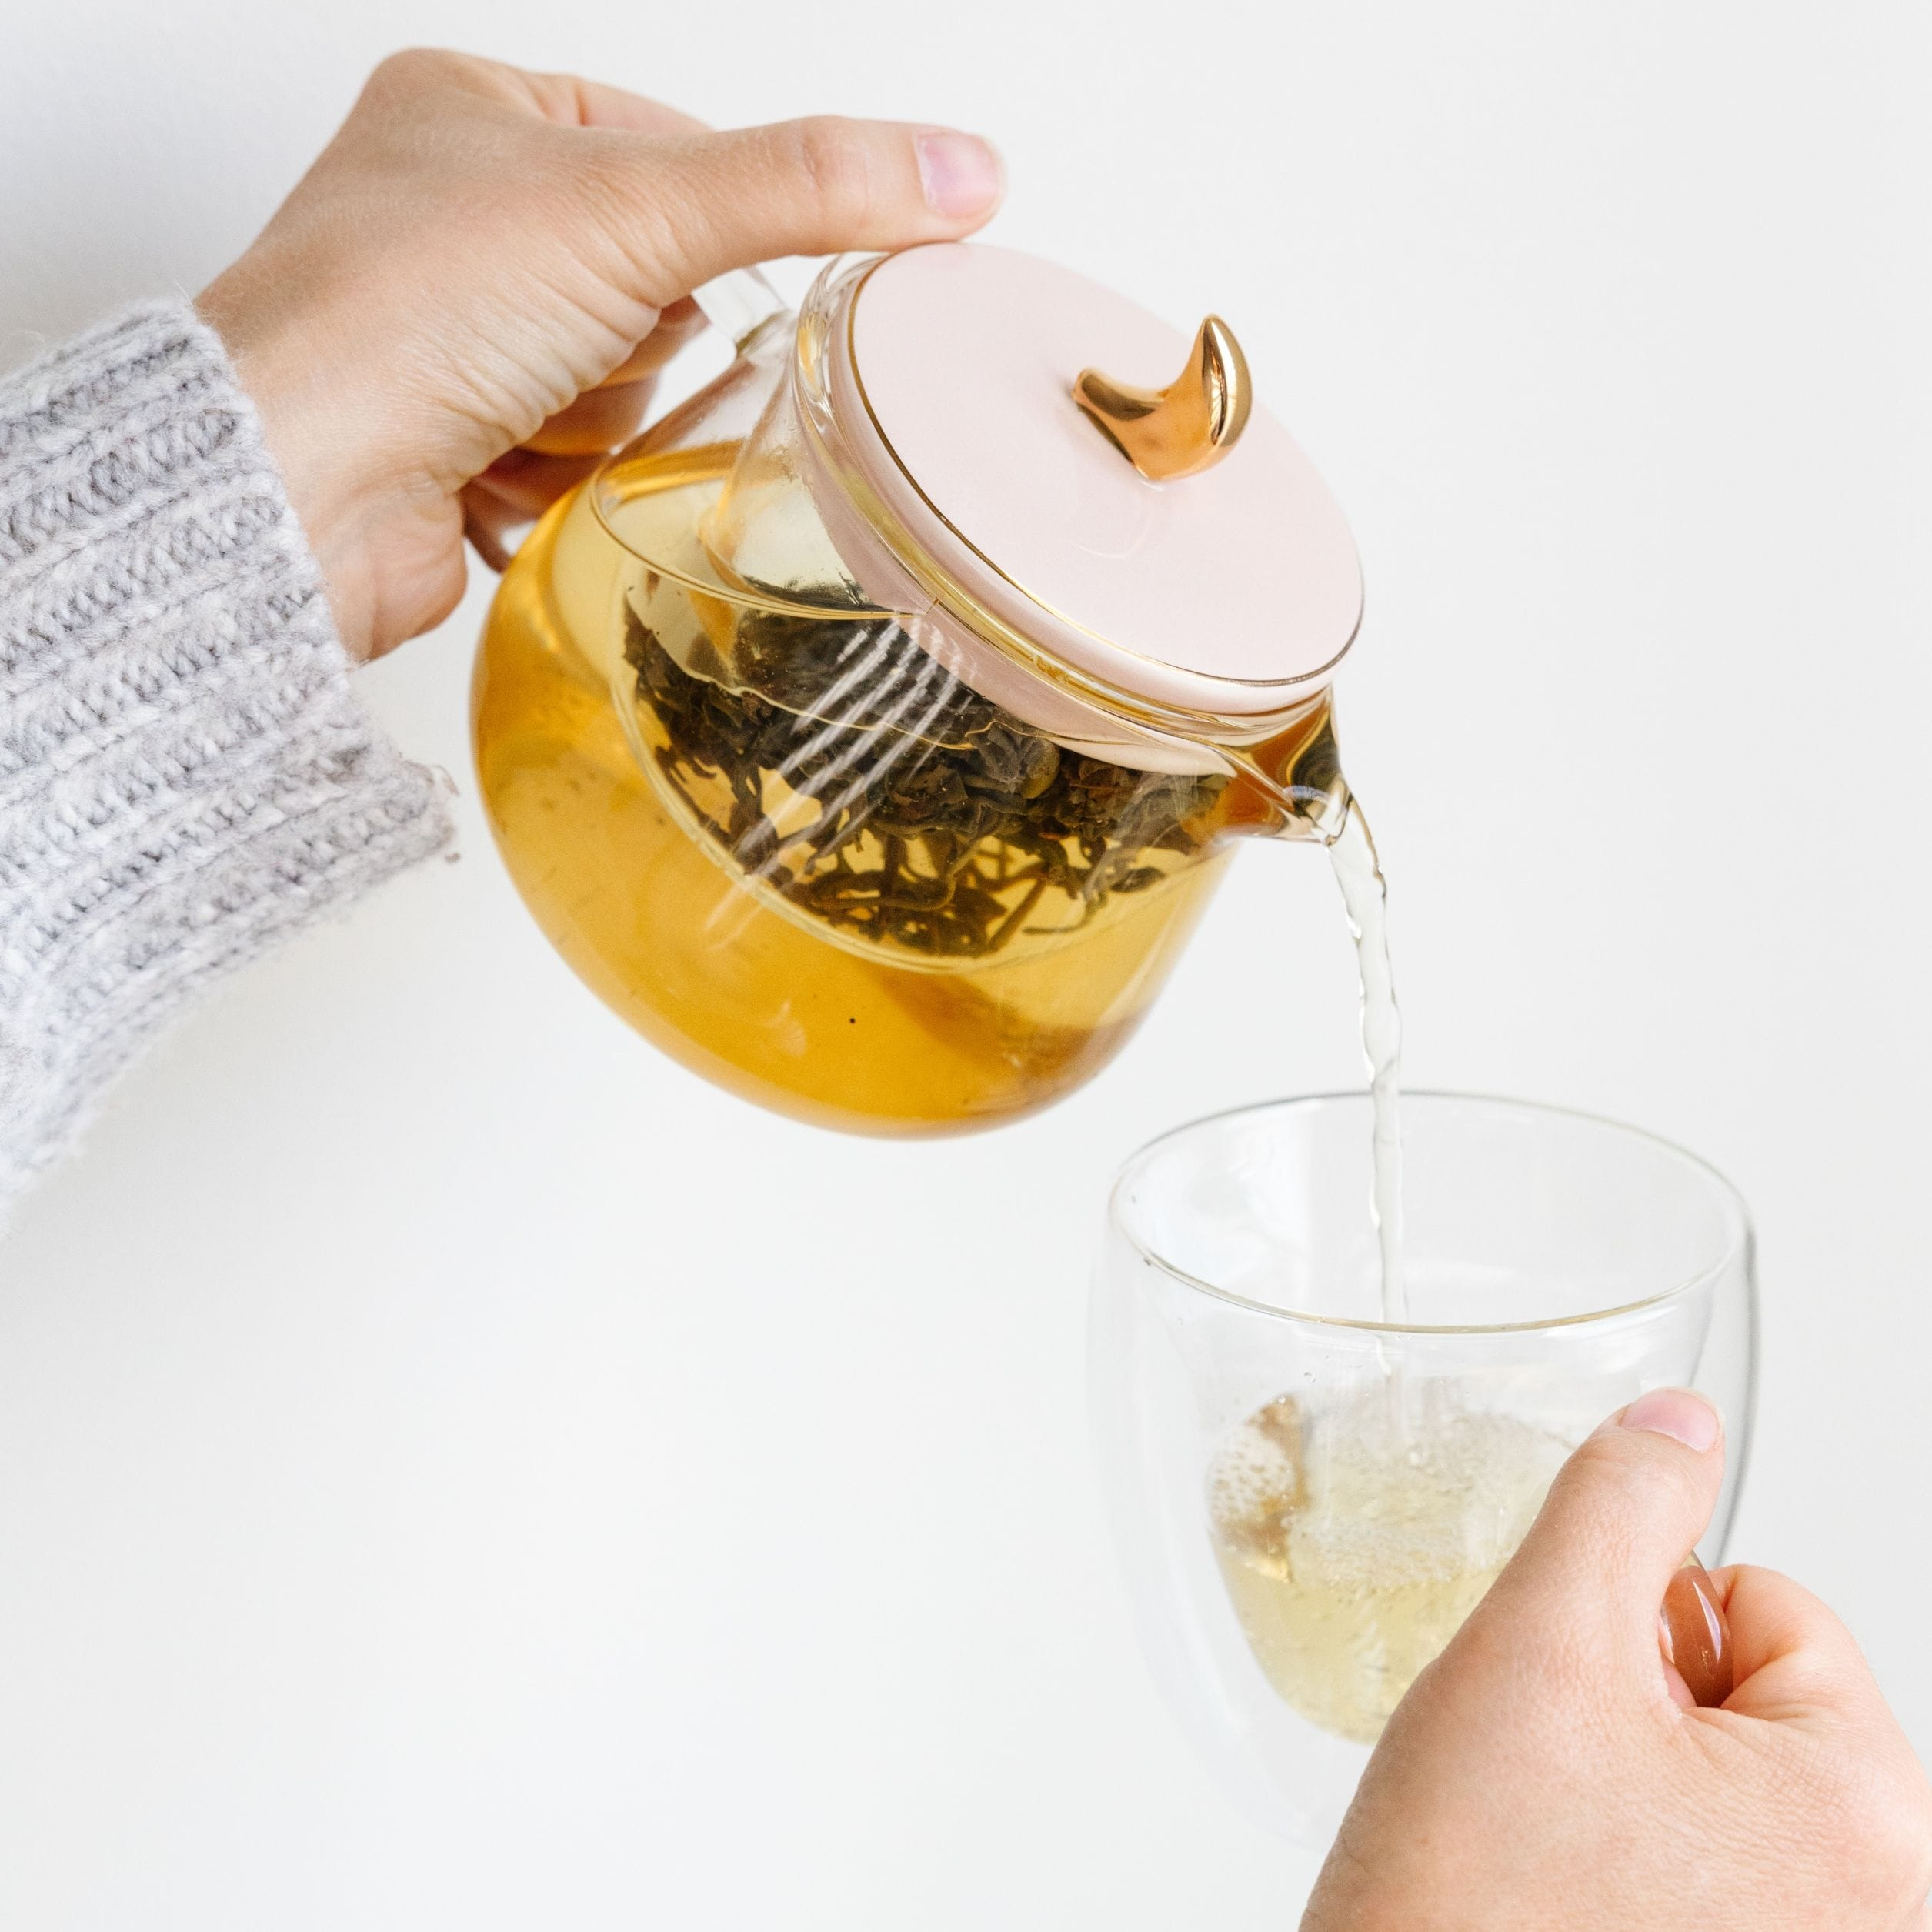  A woman pouring tea from a teapot into a mug